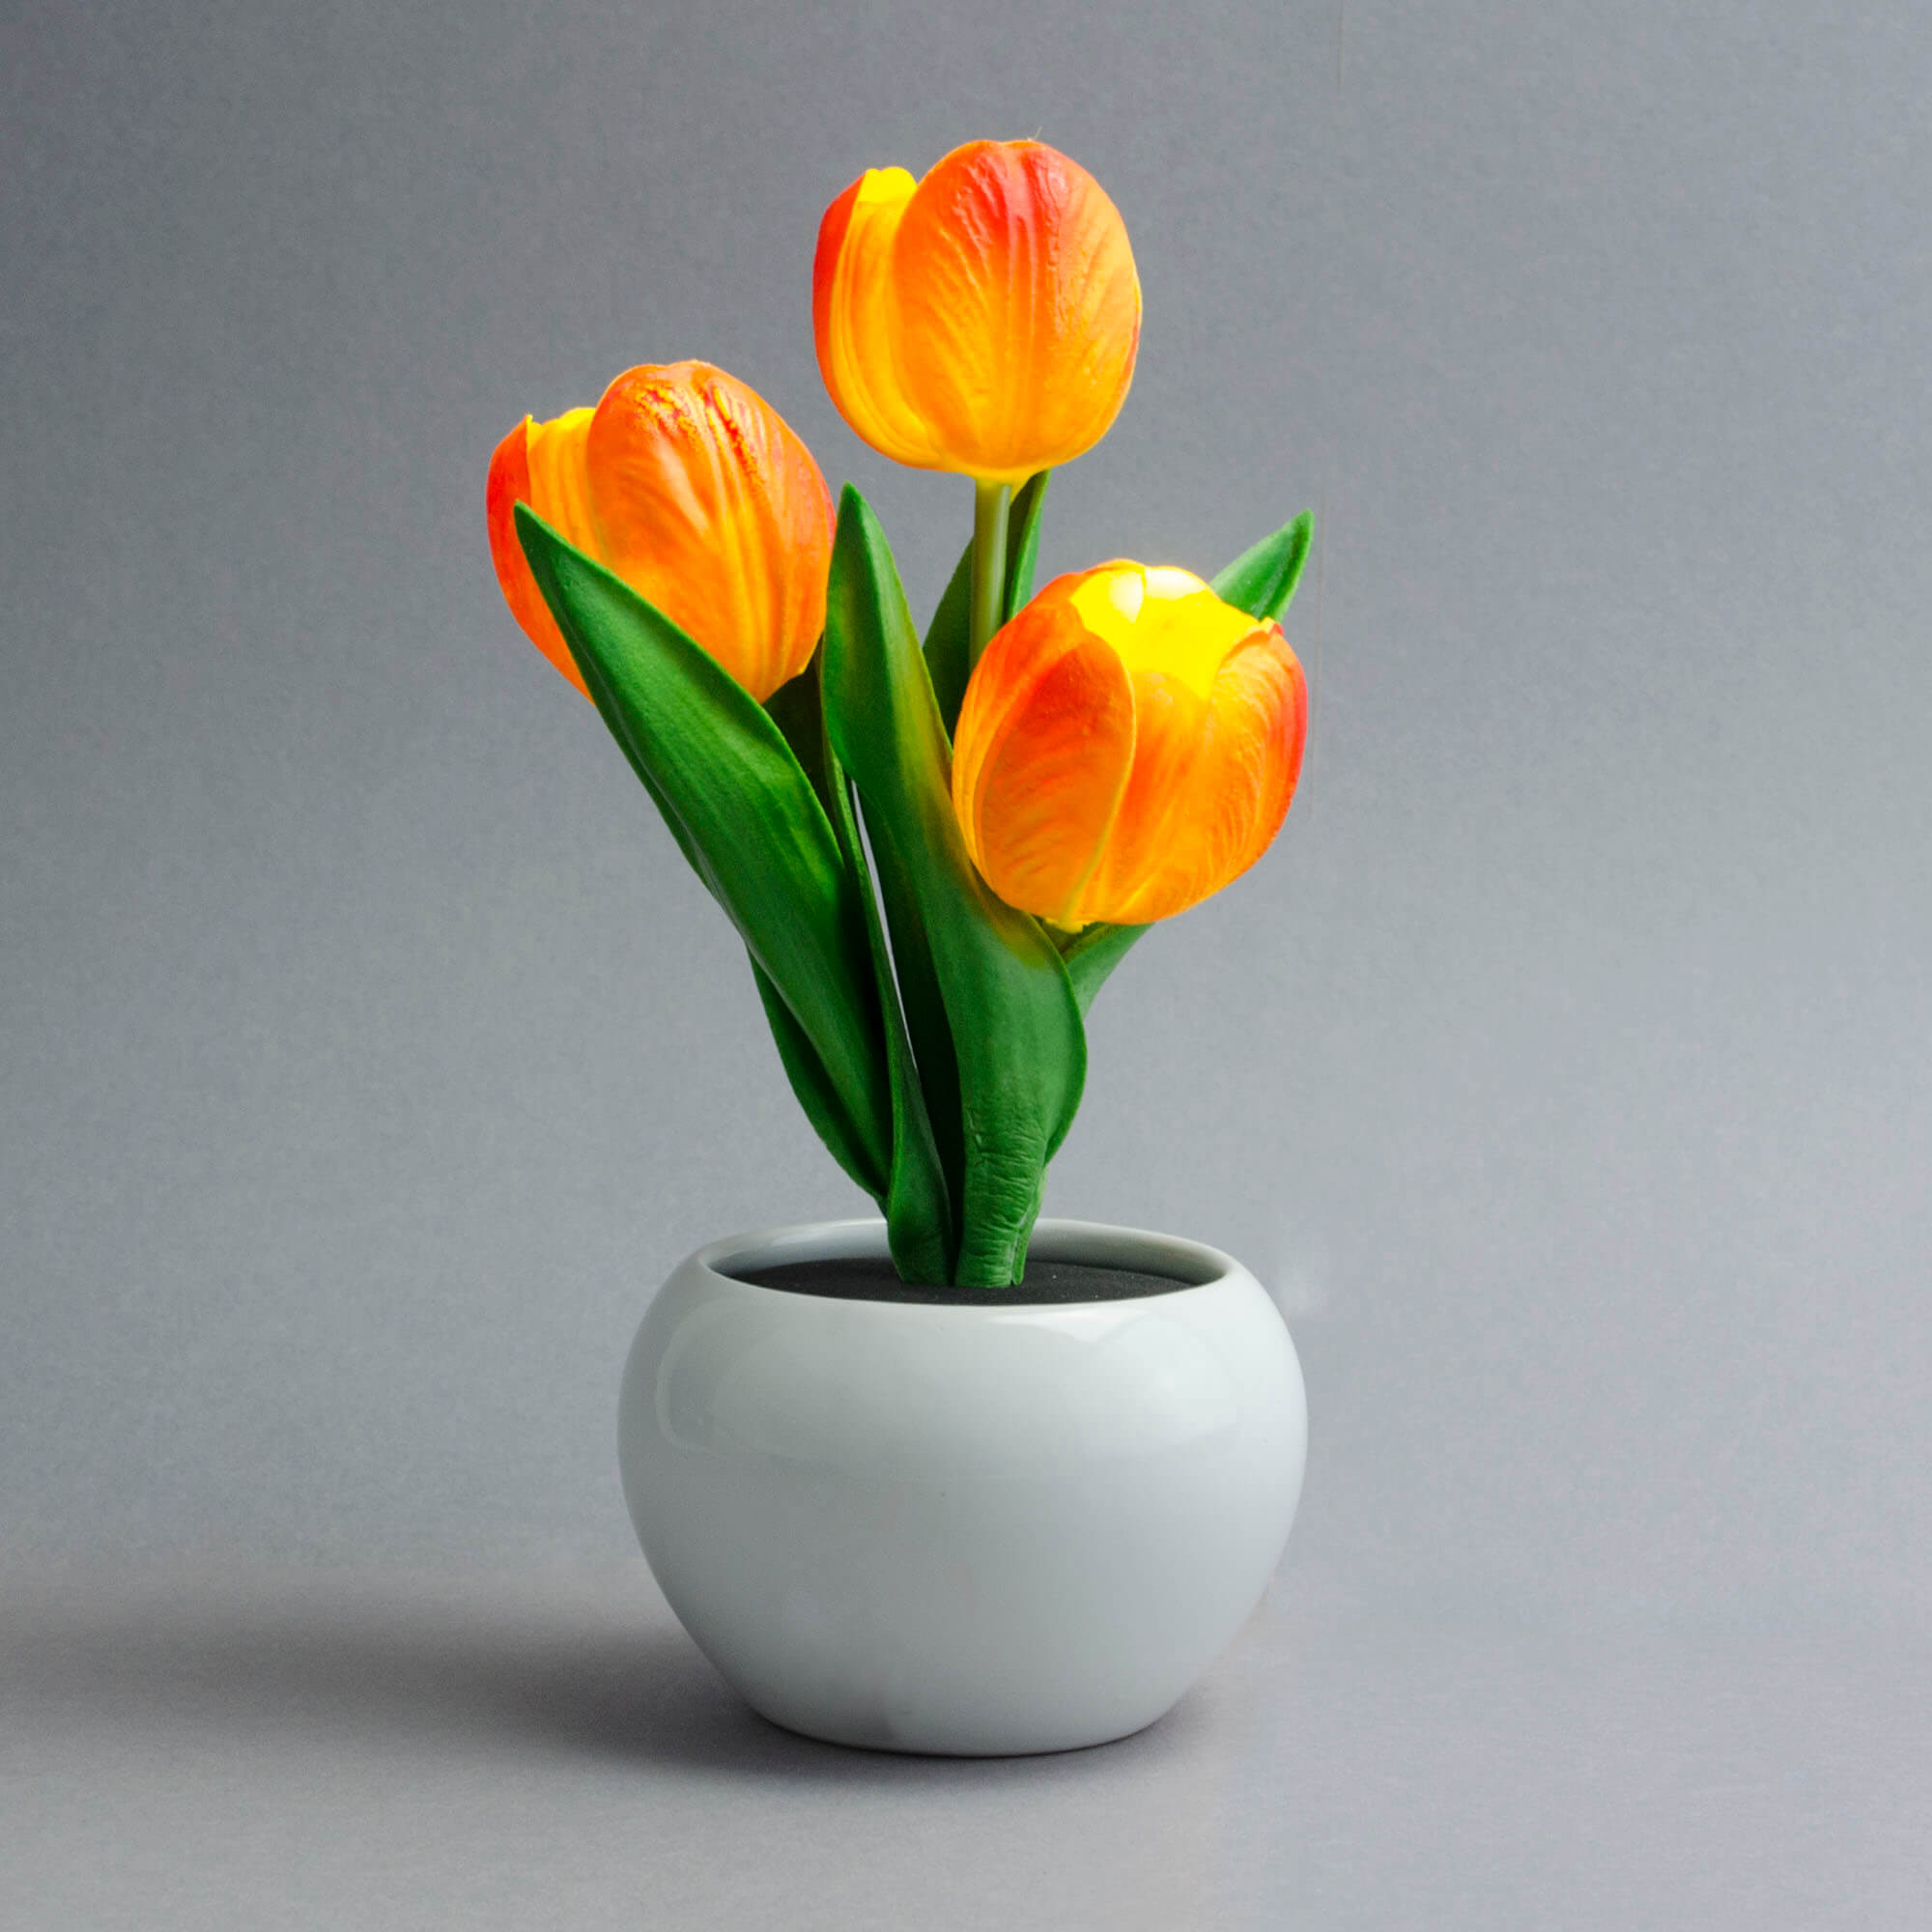 X4-LIFE LED Tulpen im Blumentopf, Deko Blumen inklusive Batterie - orange